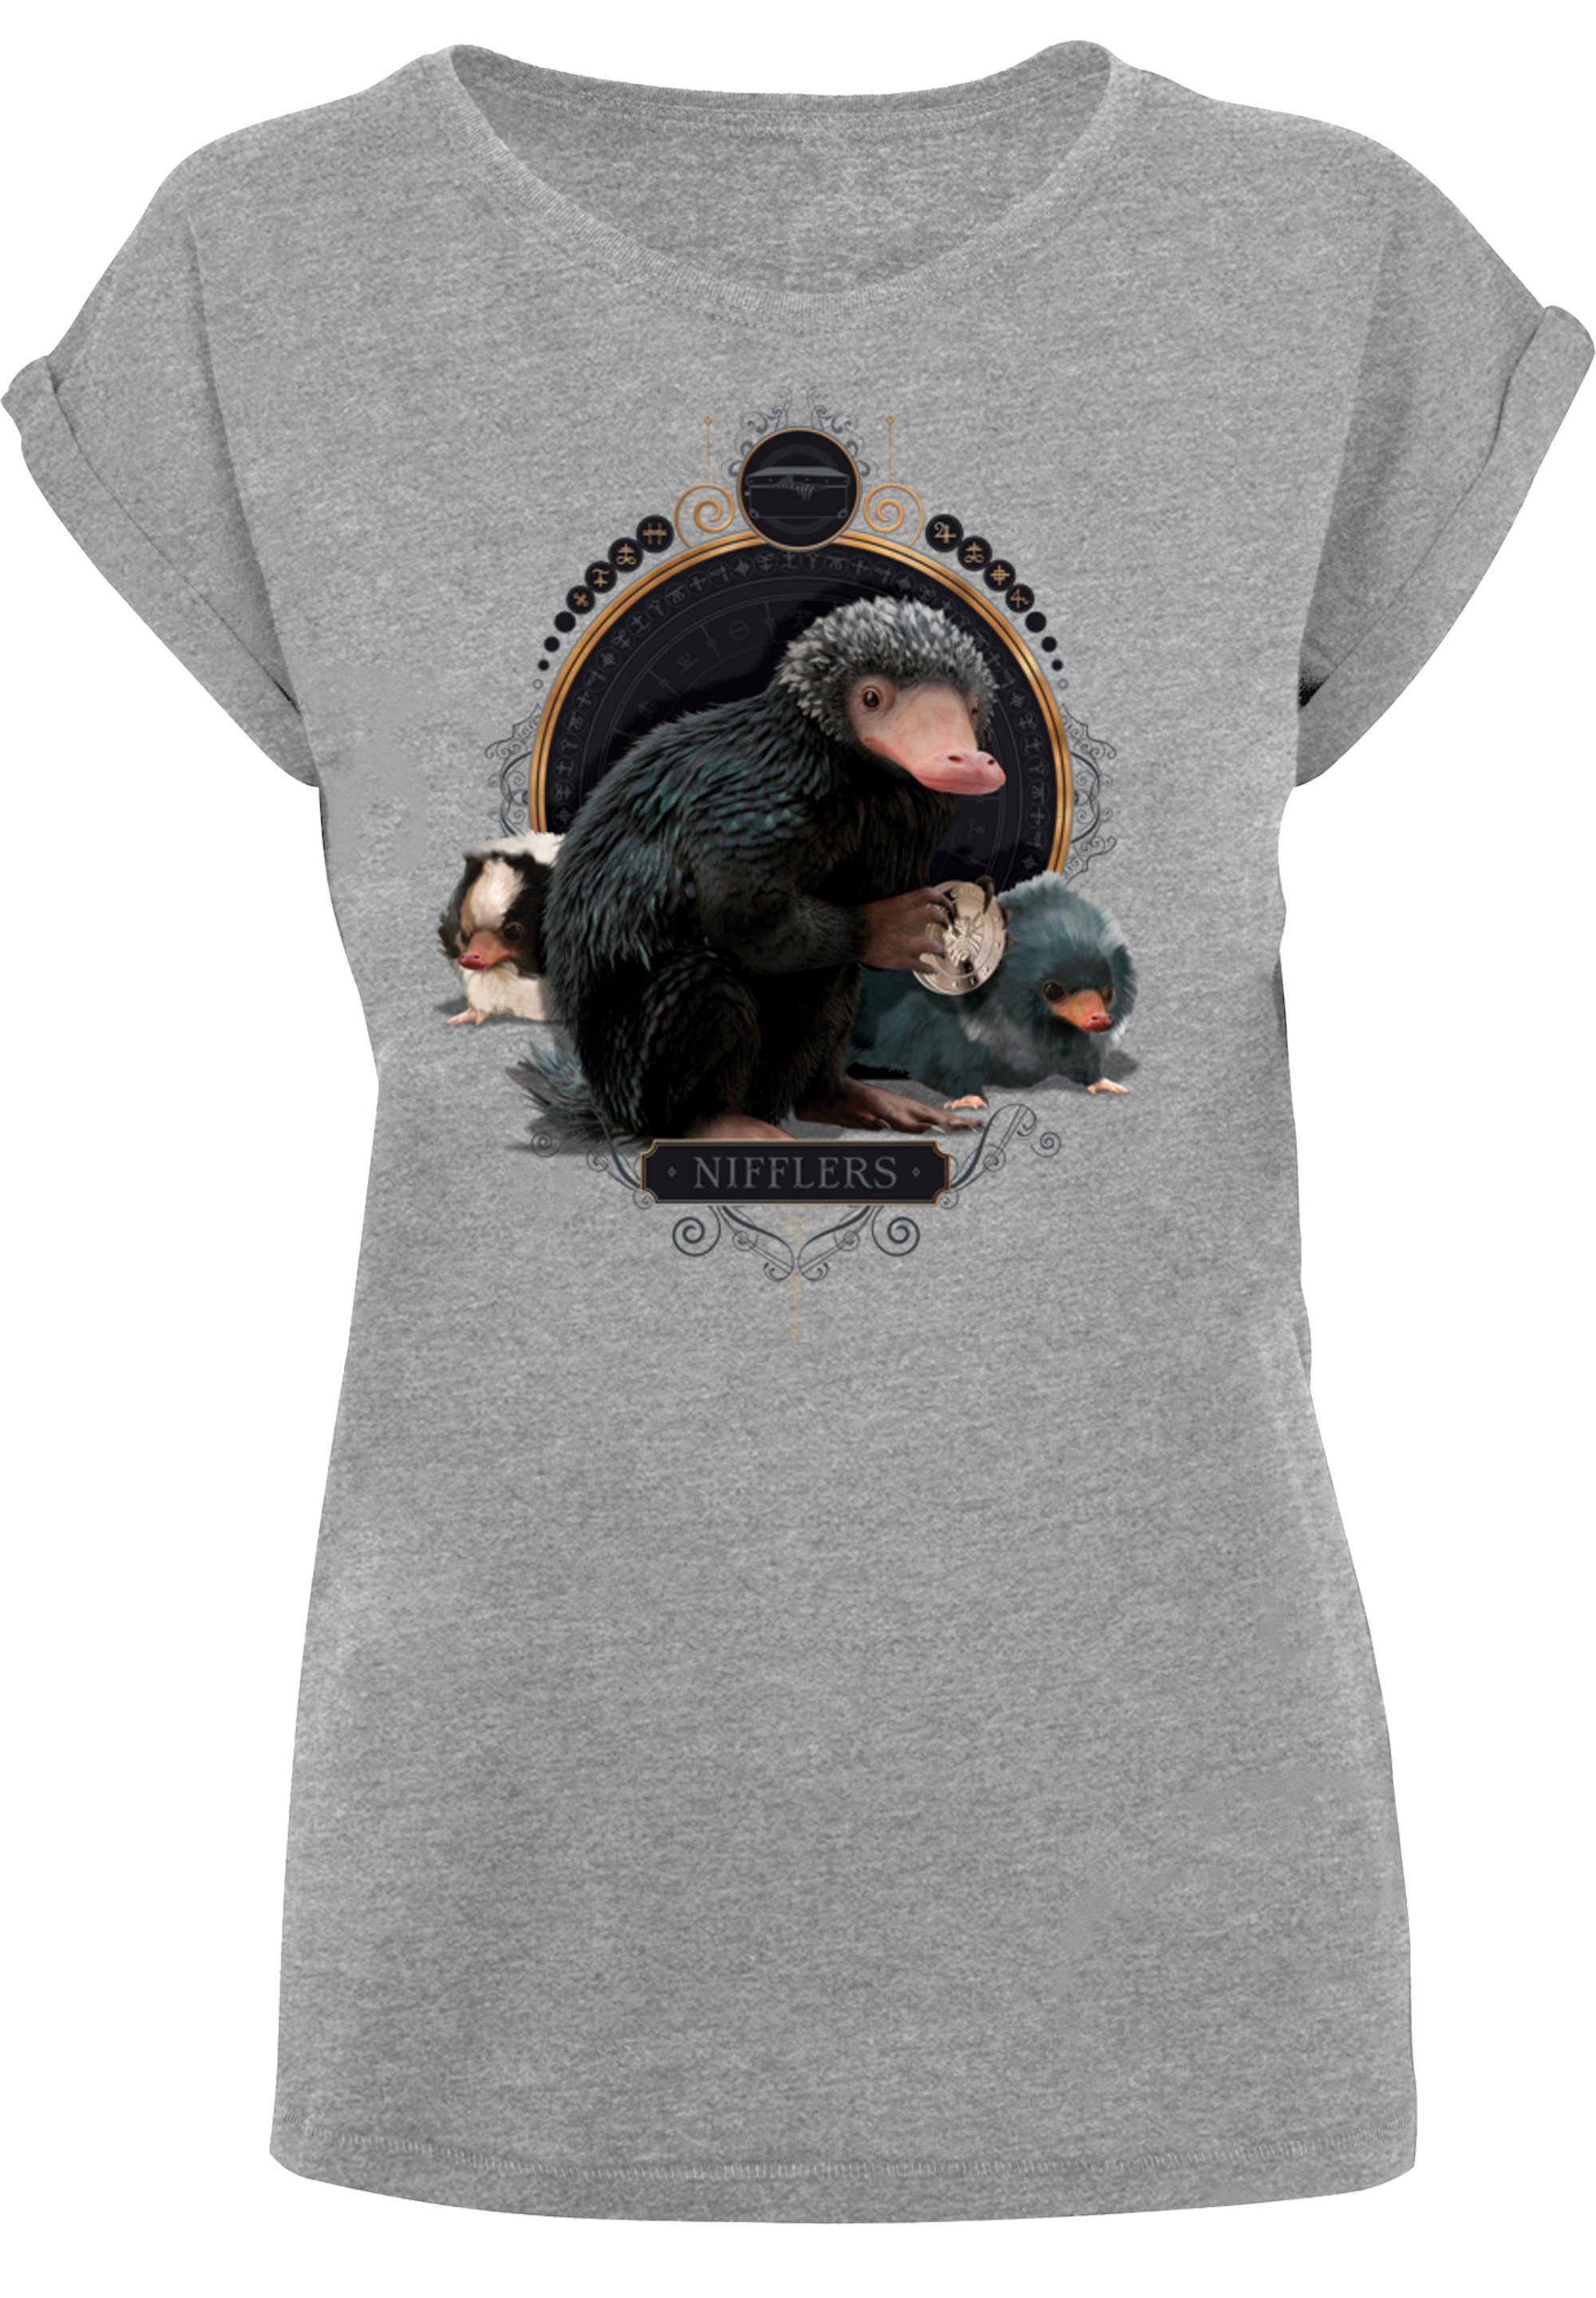 F4NT4STIC T-Shirt Phantastische Tierwesen Baby Print Nifflers